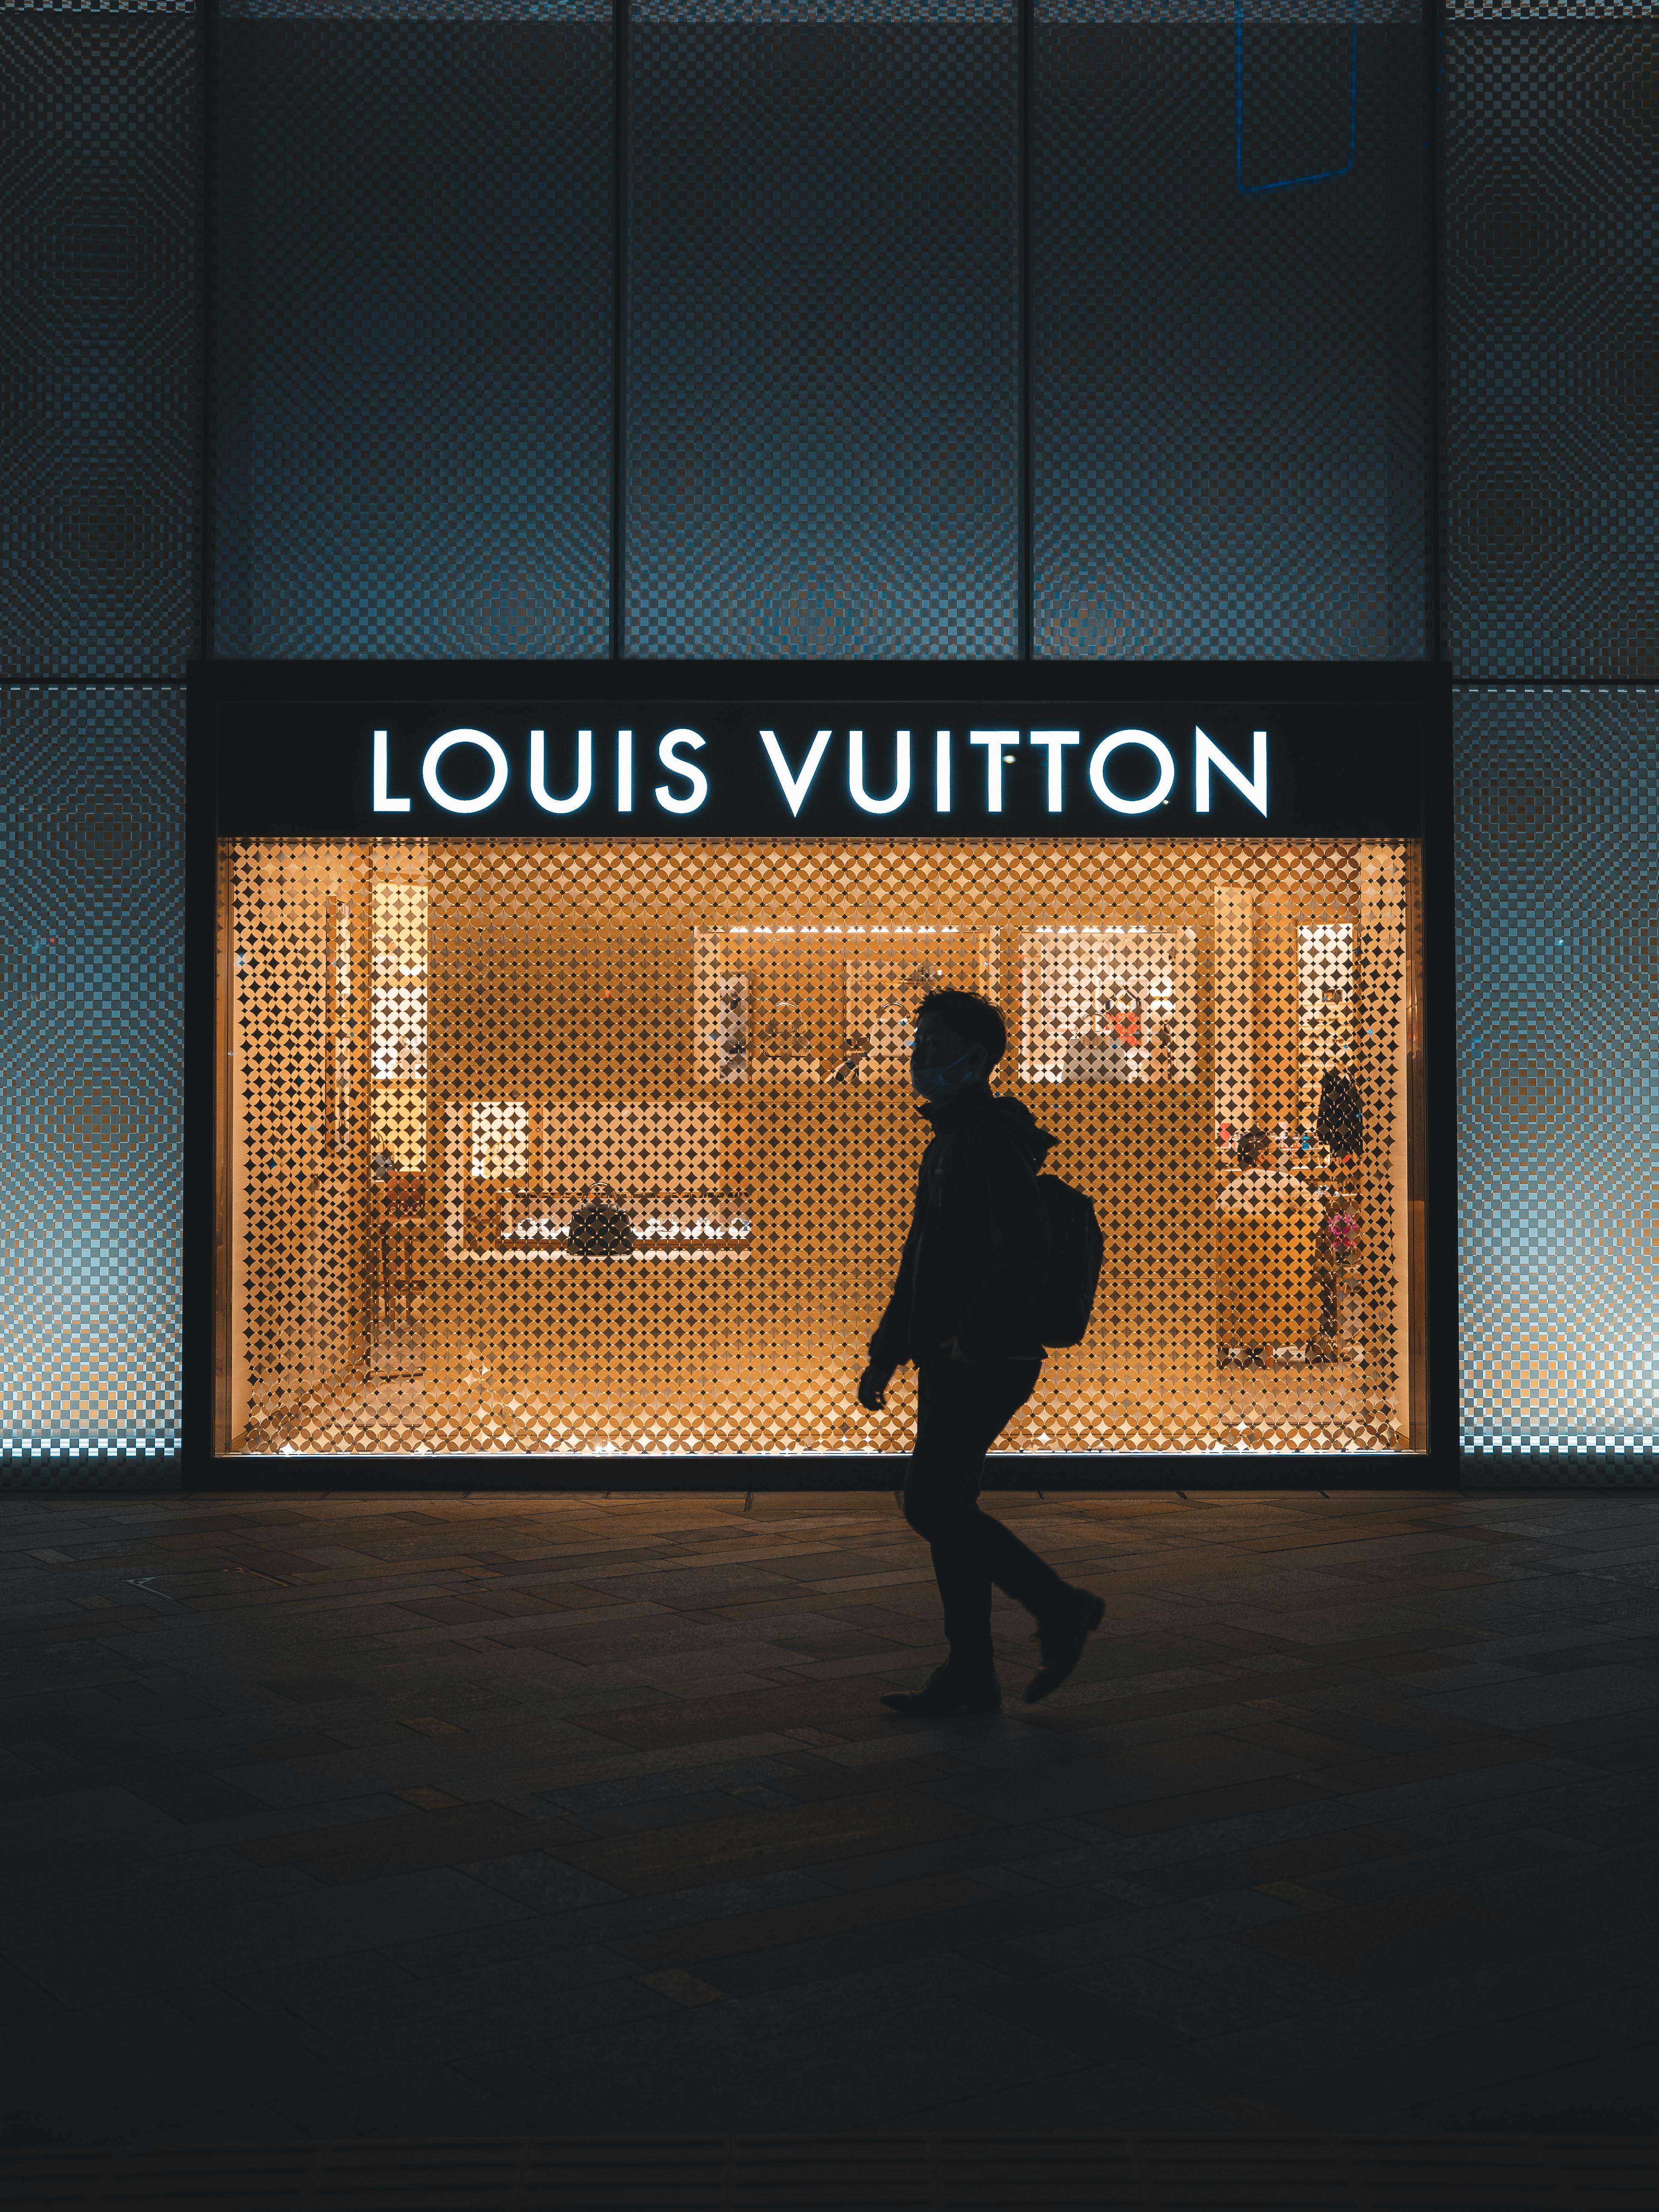 Pedestrians walking past the Louis Vuitton store on 5th avenue Stock Photo  - Alamy